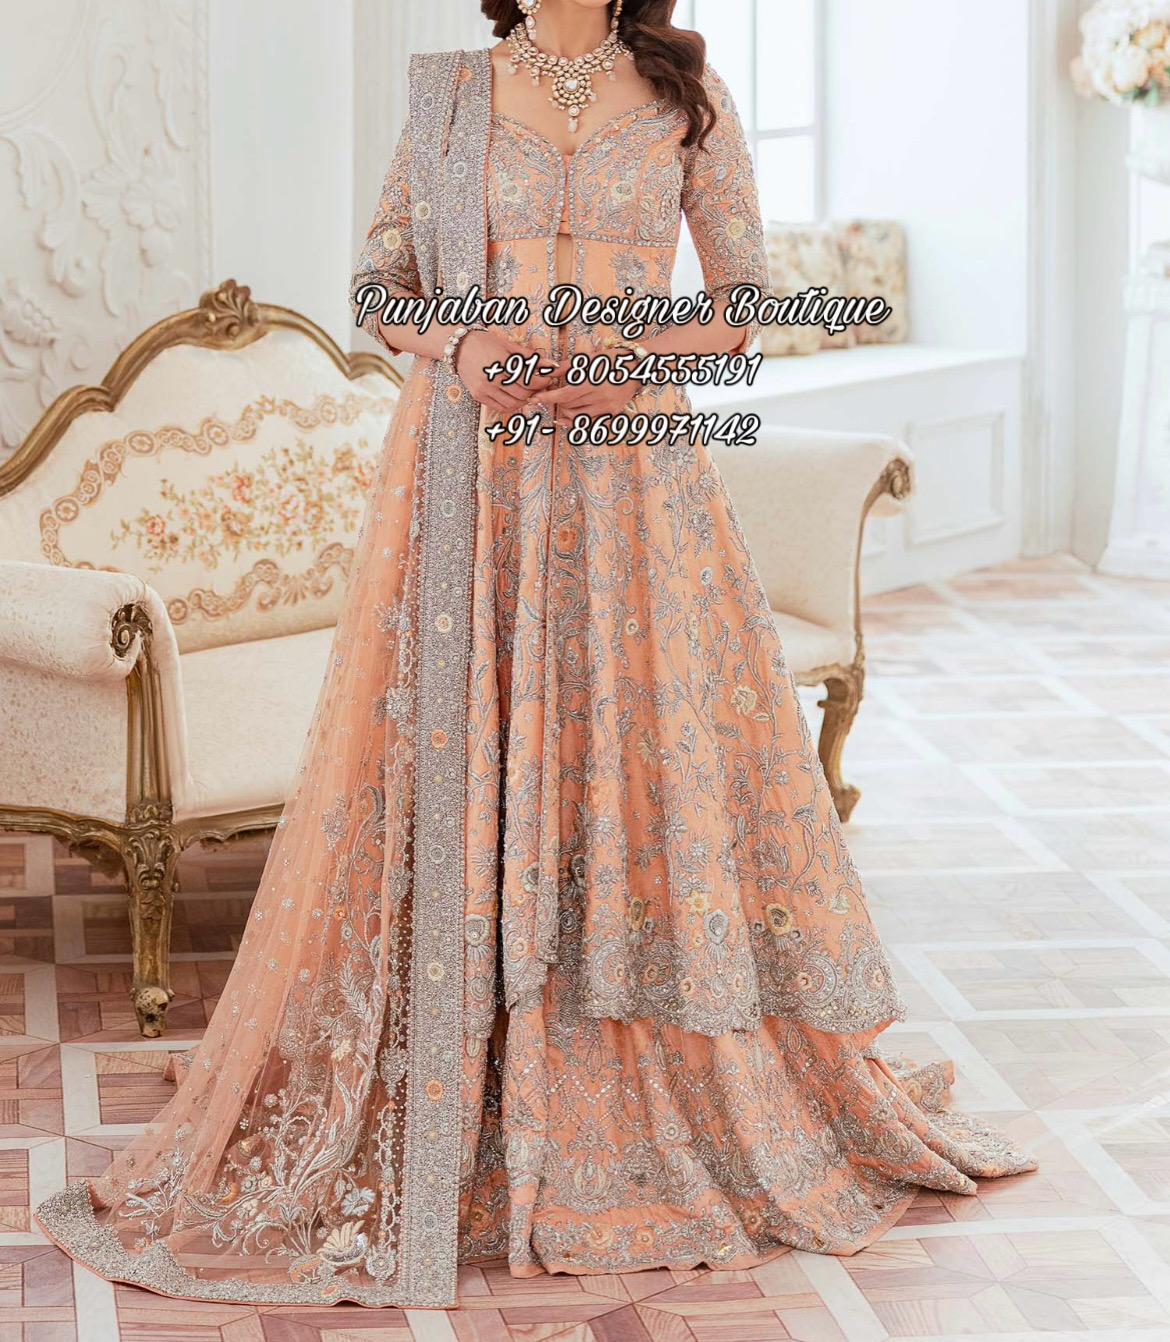 islamic modest satin maxi dress elegant| Alibaba.com